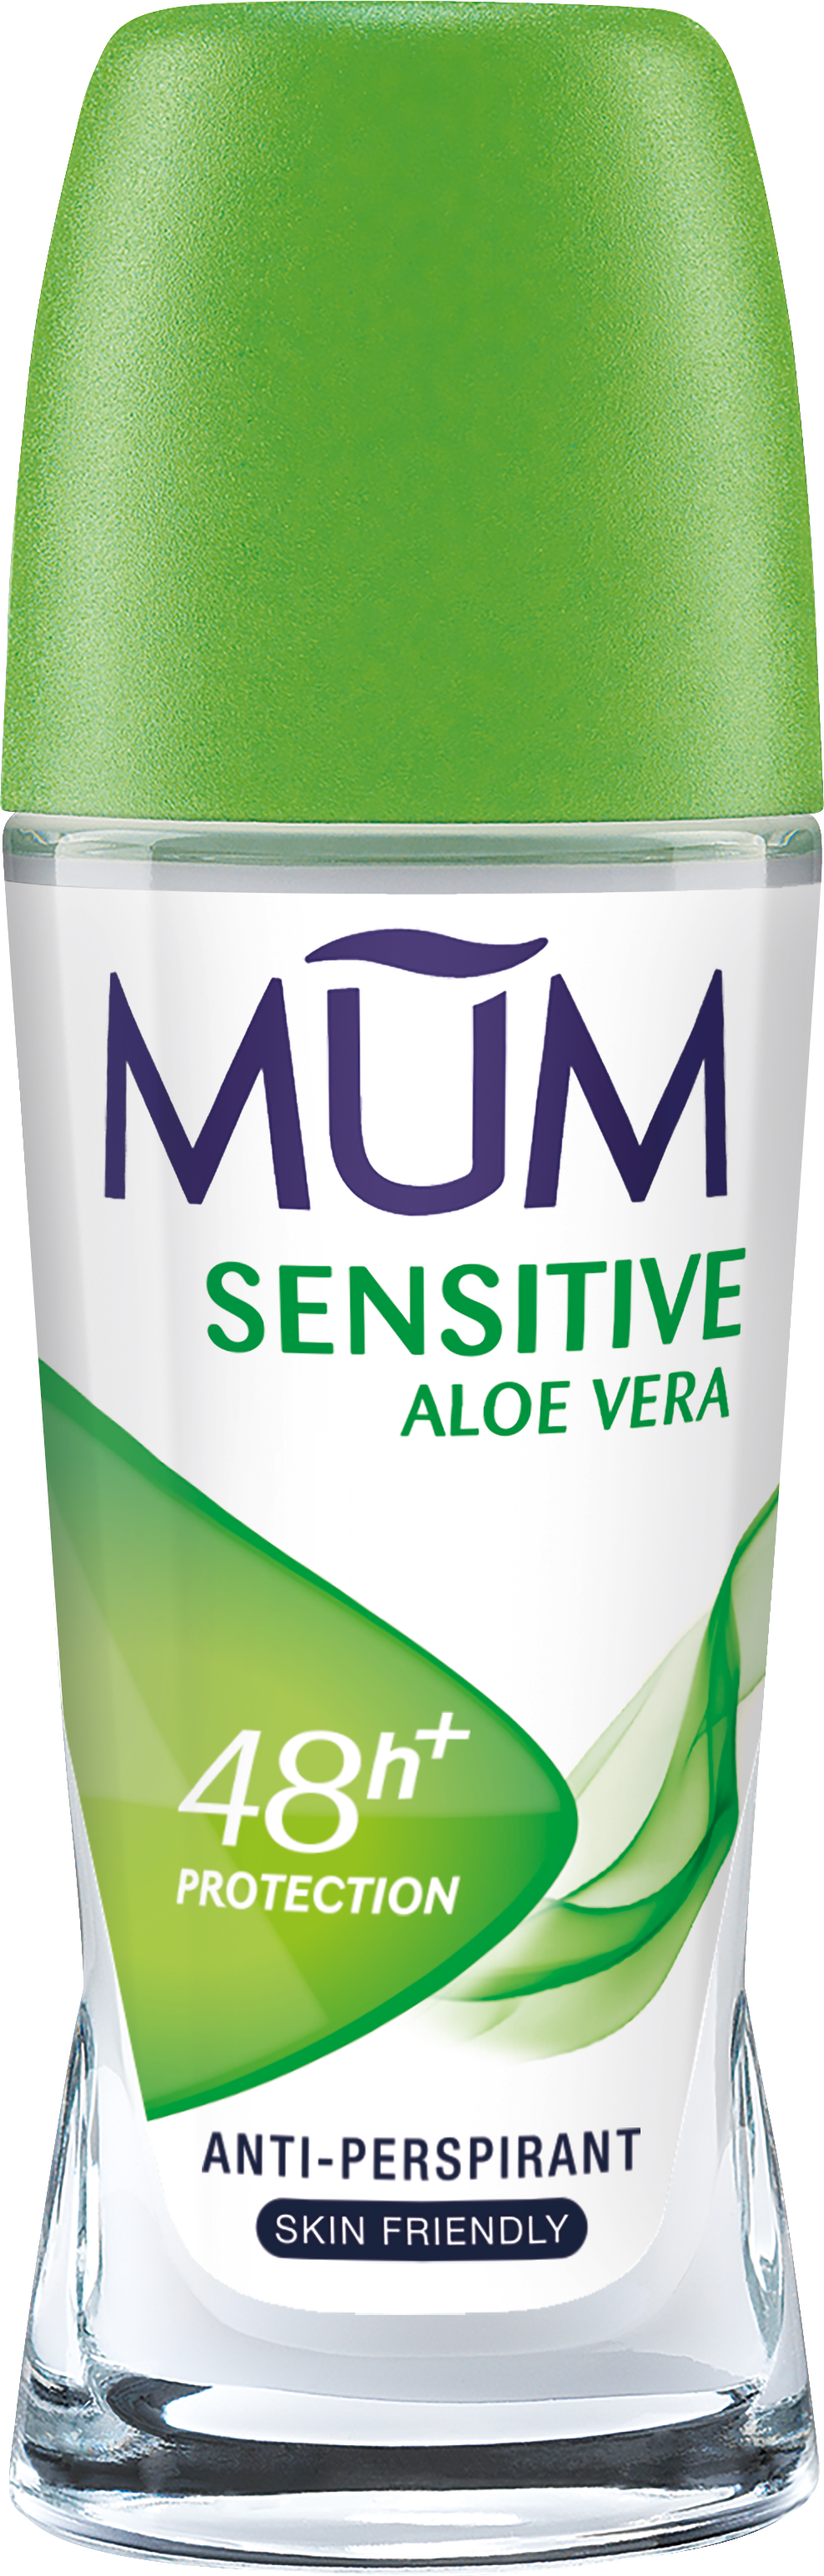 Sensitive Aloe Vera